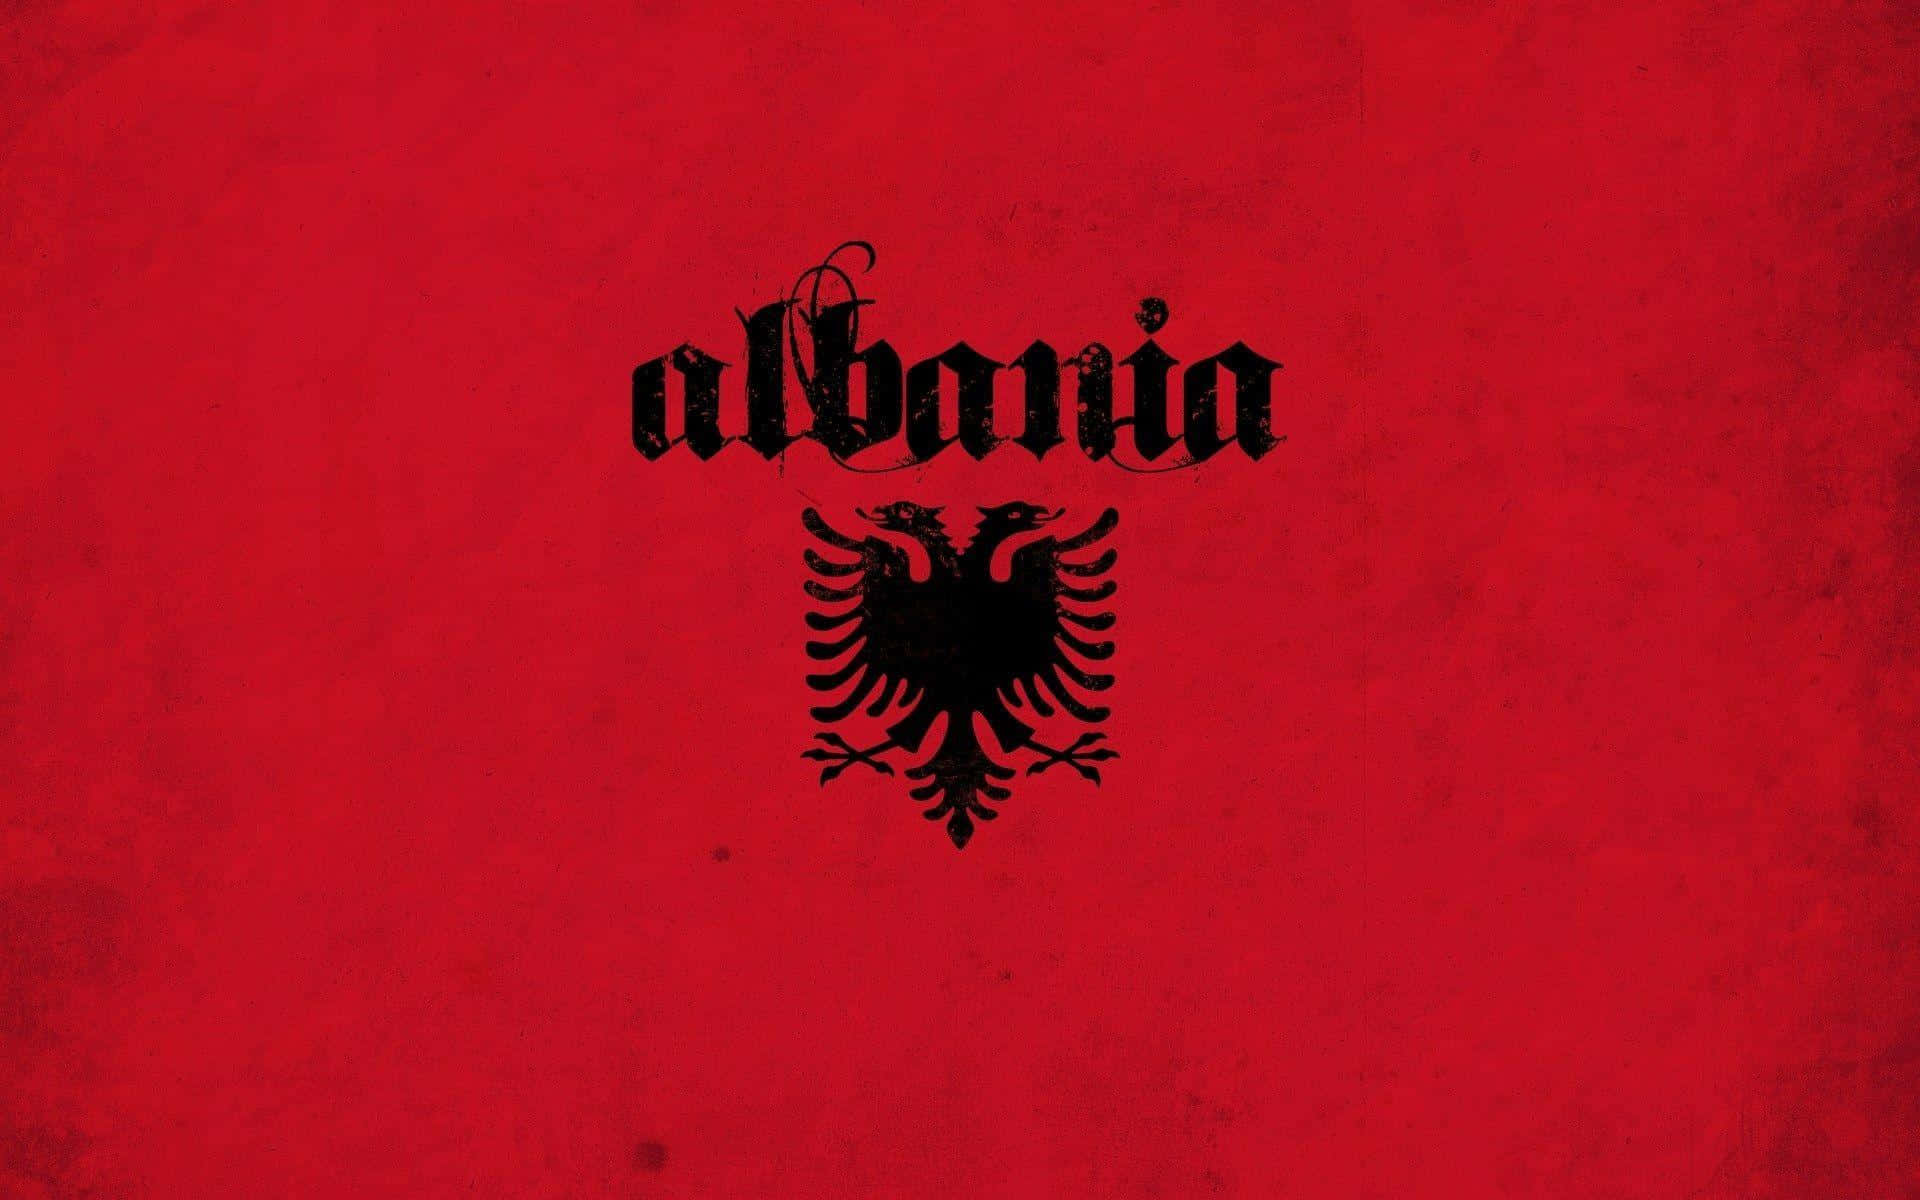 albania-1920-x-1200-background-c52t4wv9yjig4e8l.jpg